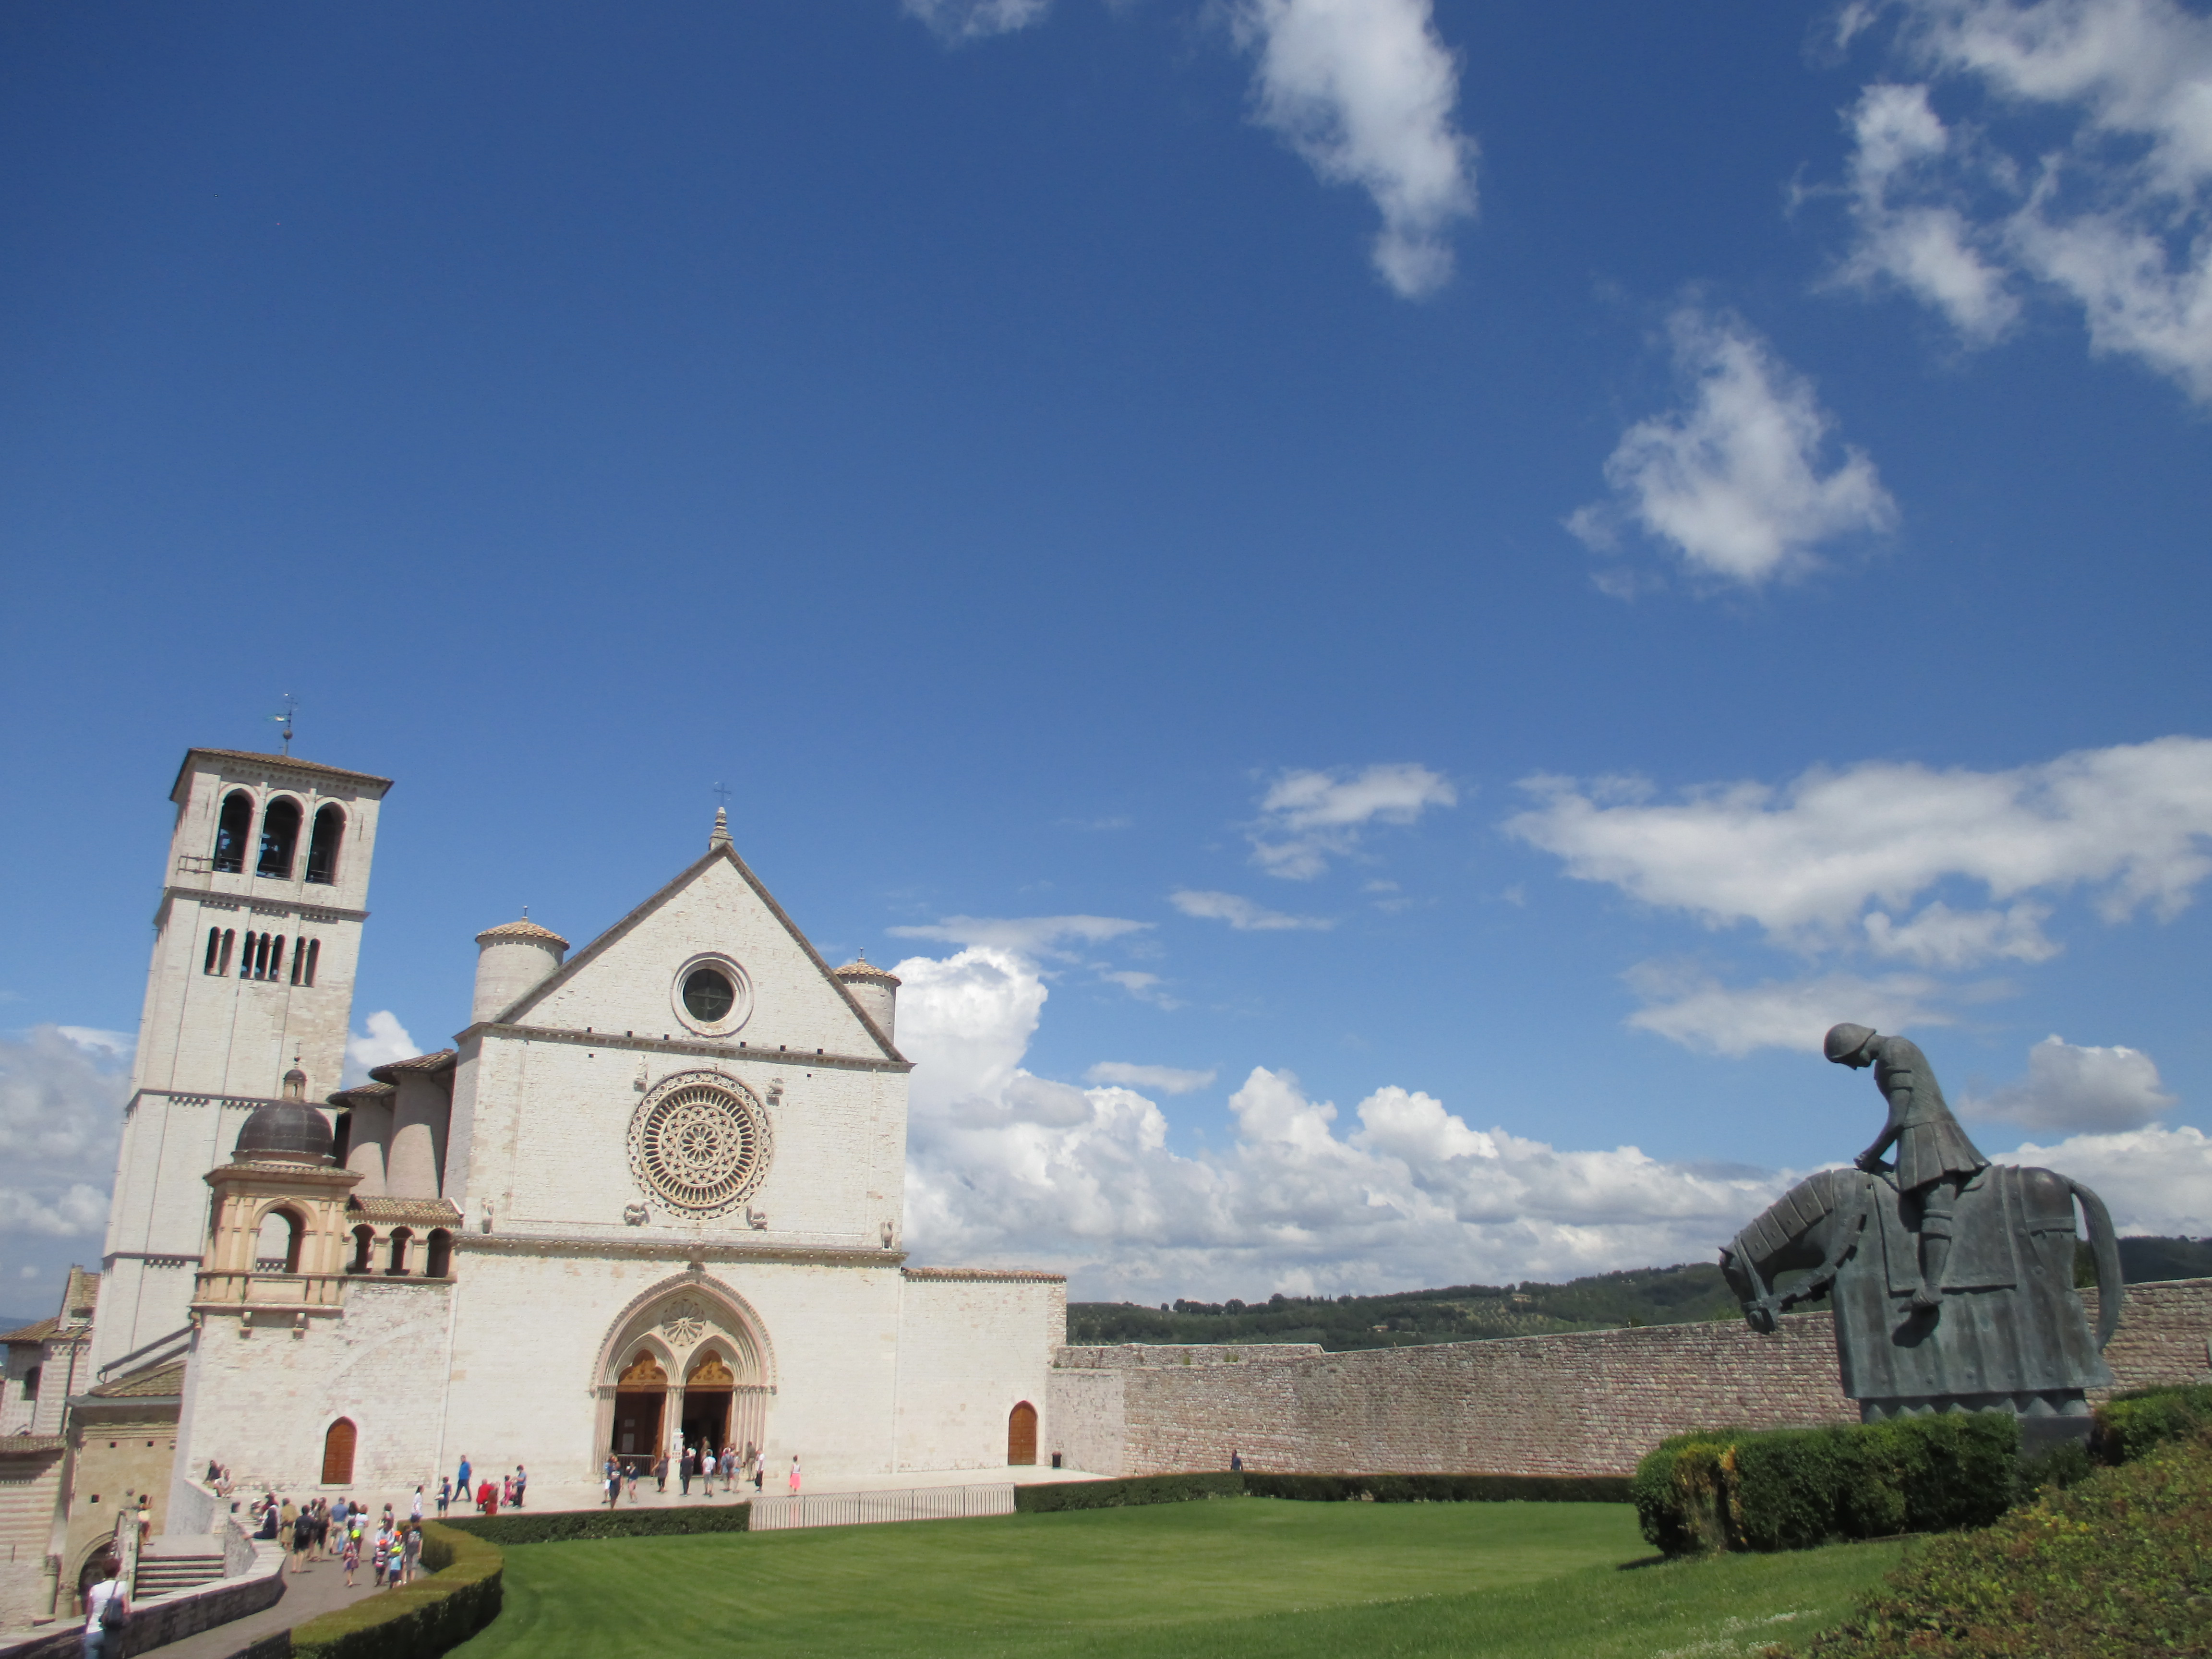 "Basilica of San Francesco, Assisi" Photo by Julia Walsh FSPA 